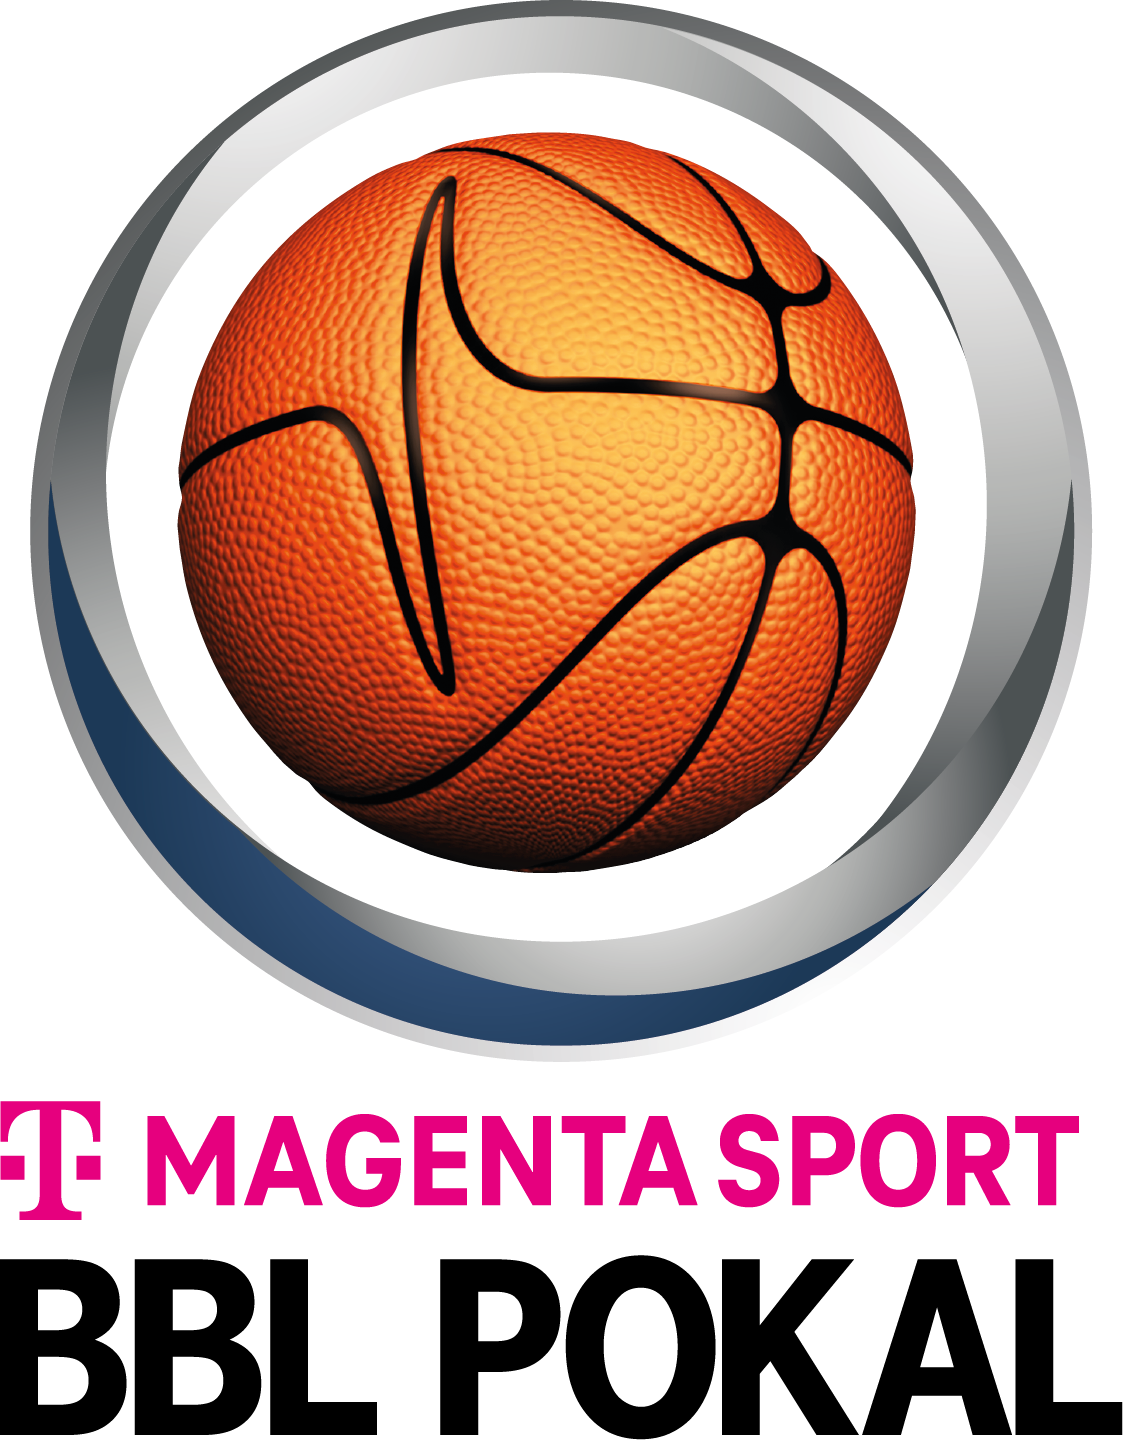 MagentaSport BBL Pokal